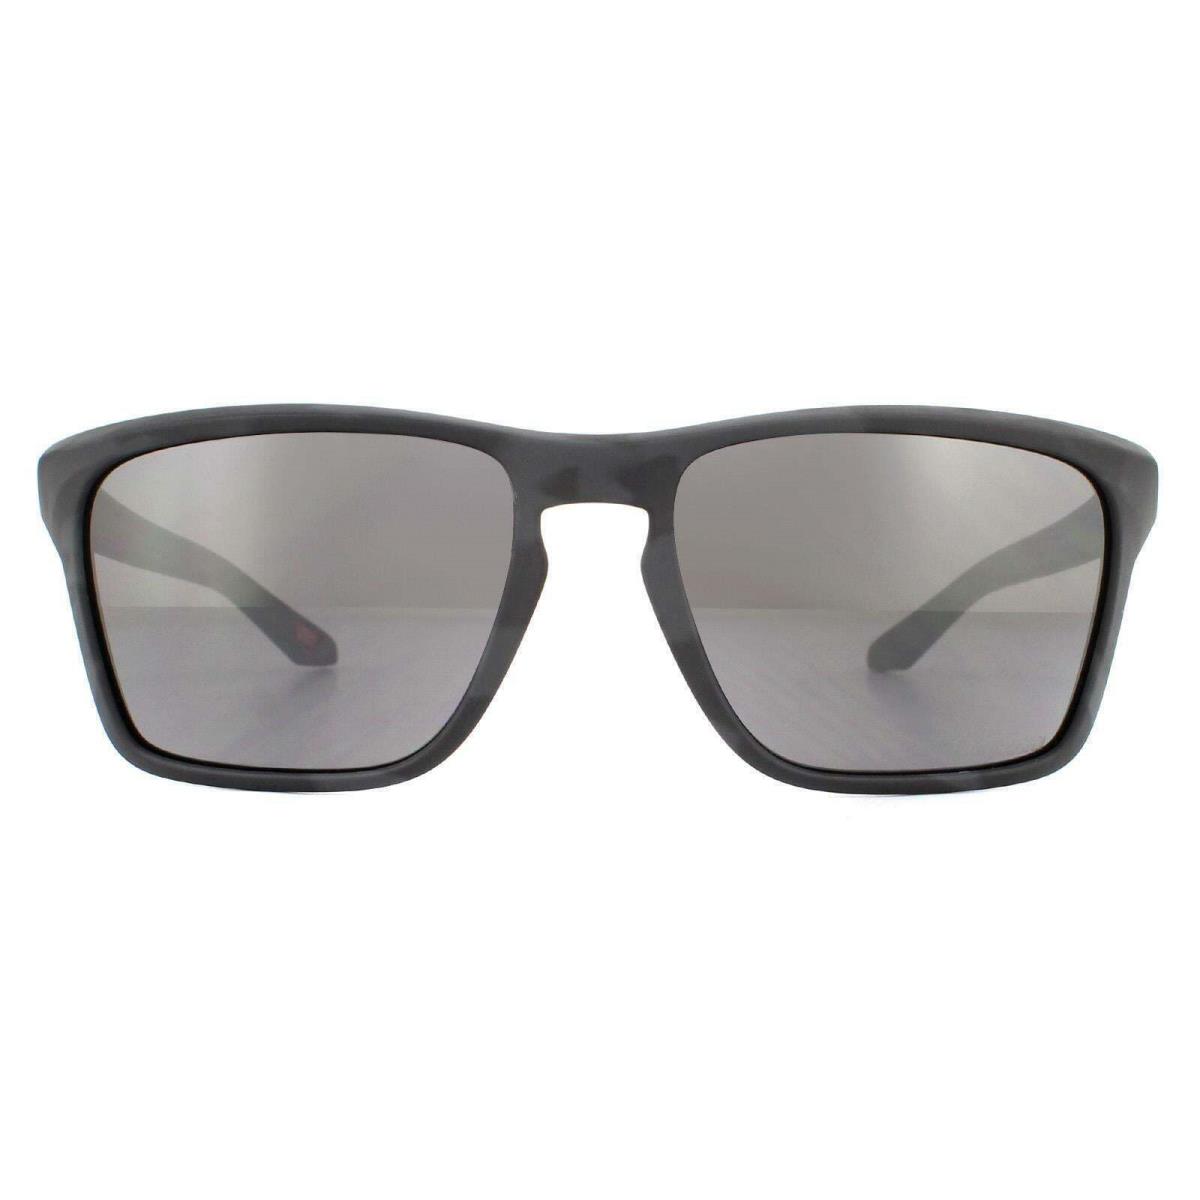 OO9448-19 Mens Oakley Sylas Sunglasses - Matte Black Camo Frame